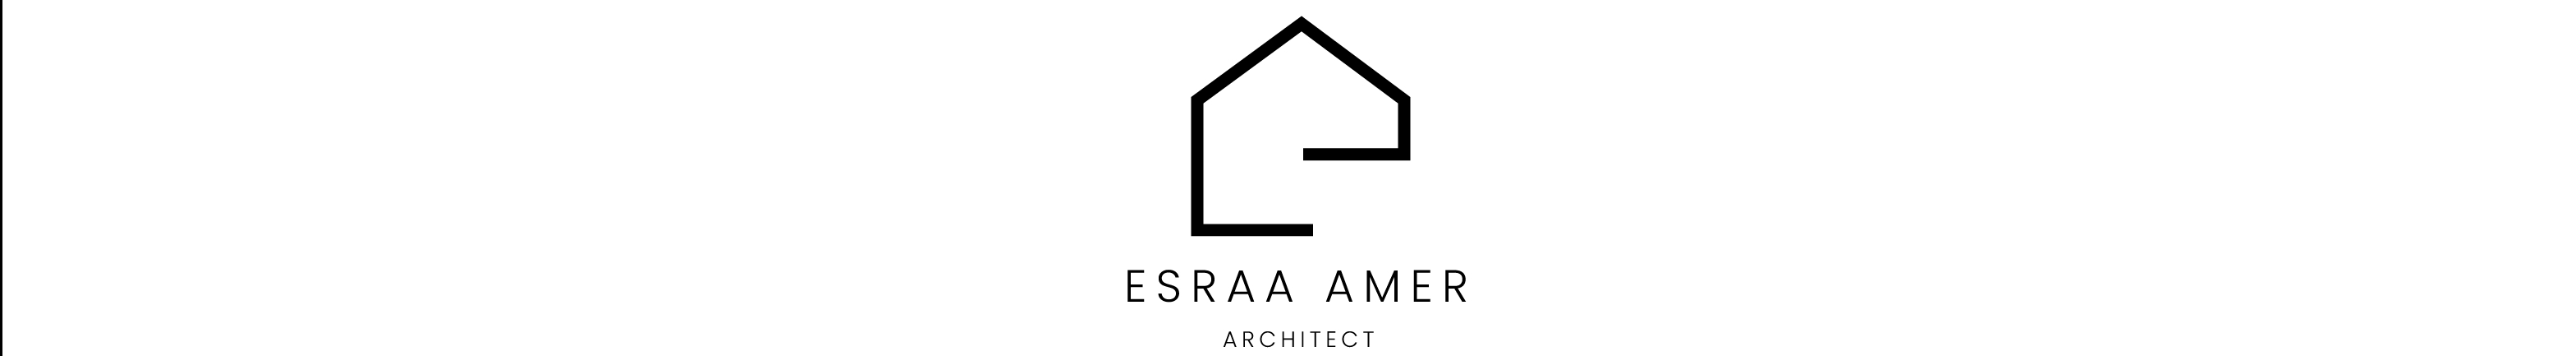 Profielbanner van Esraa Amer